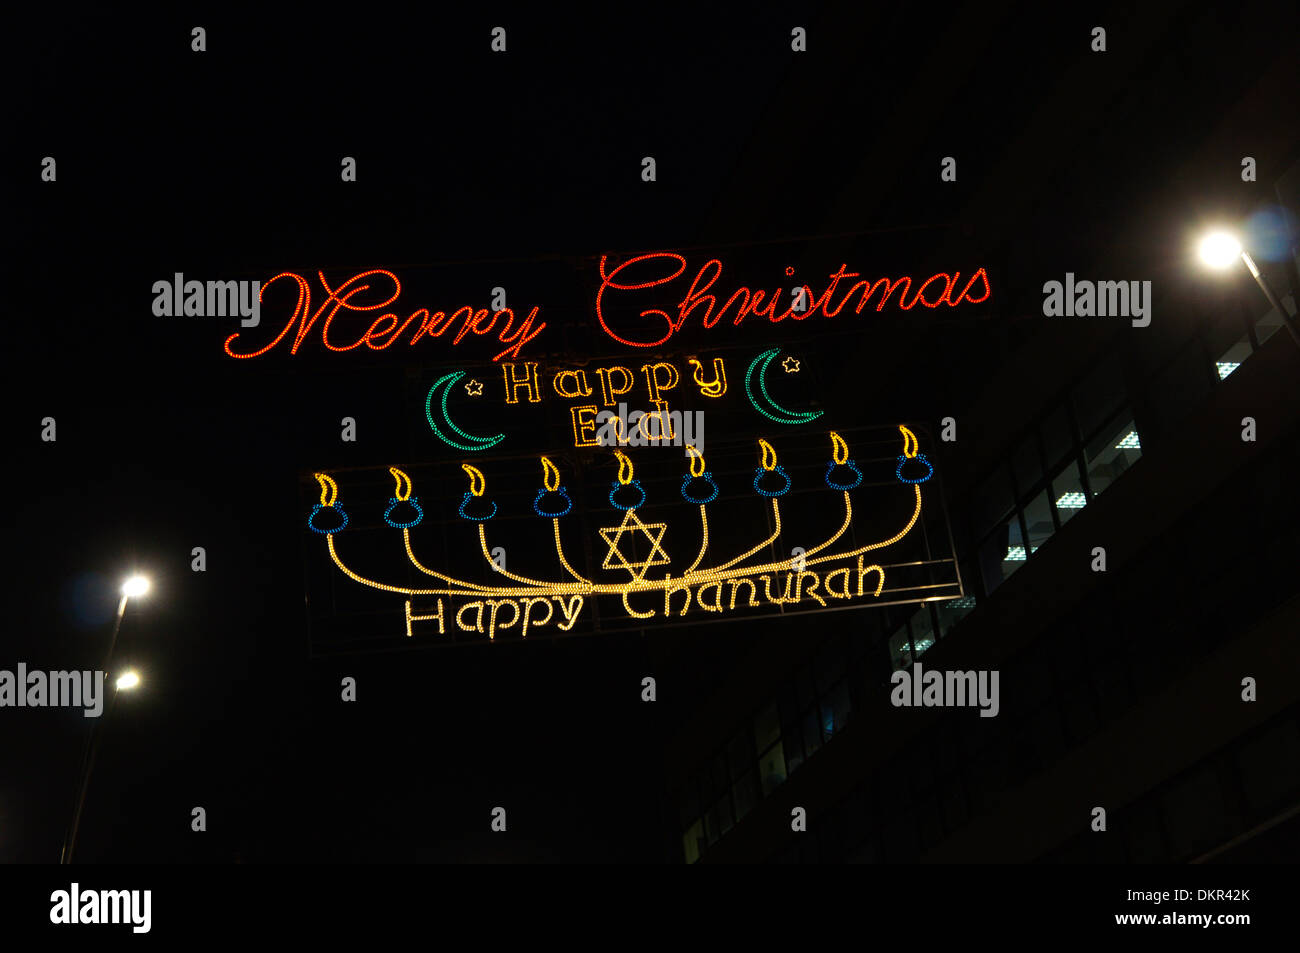 Decorative lights in Sheffield celebrating Christmas, Eid and Chanukah. Stock Photo